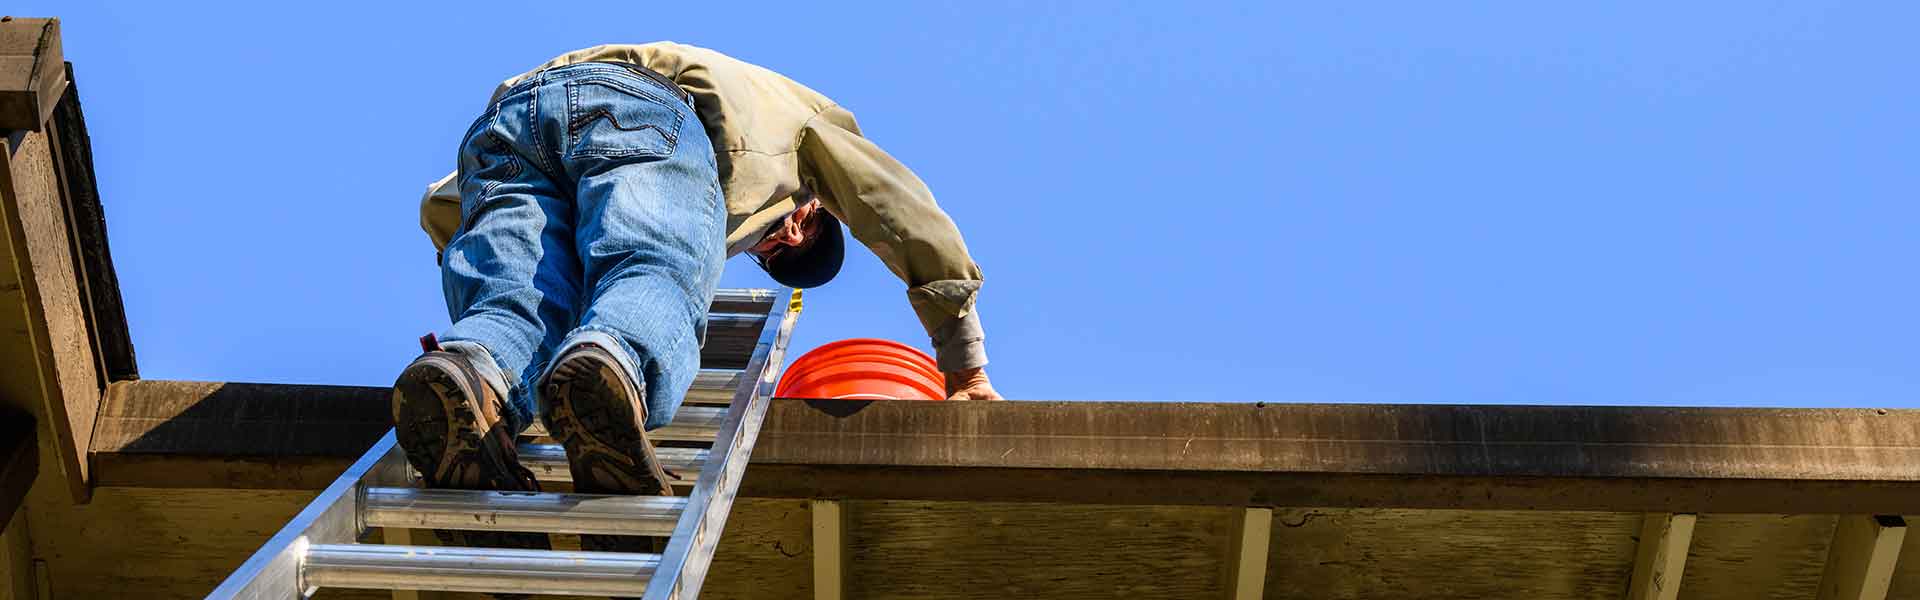 elderly man on high ladder cleaning gutters